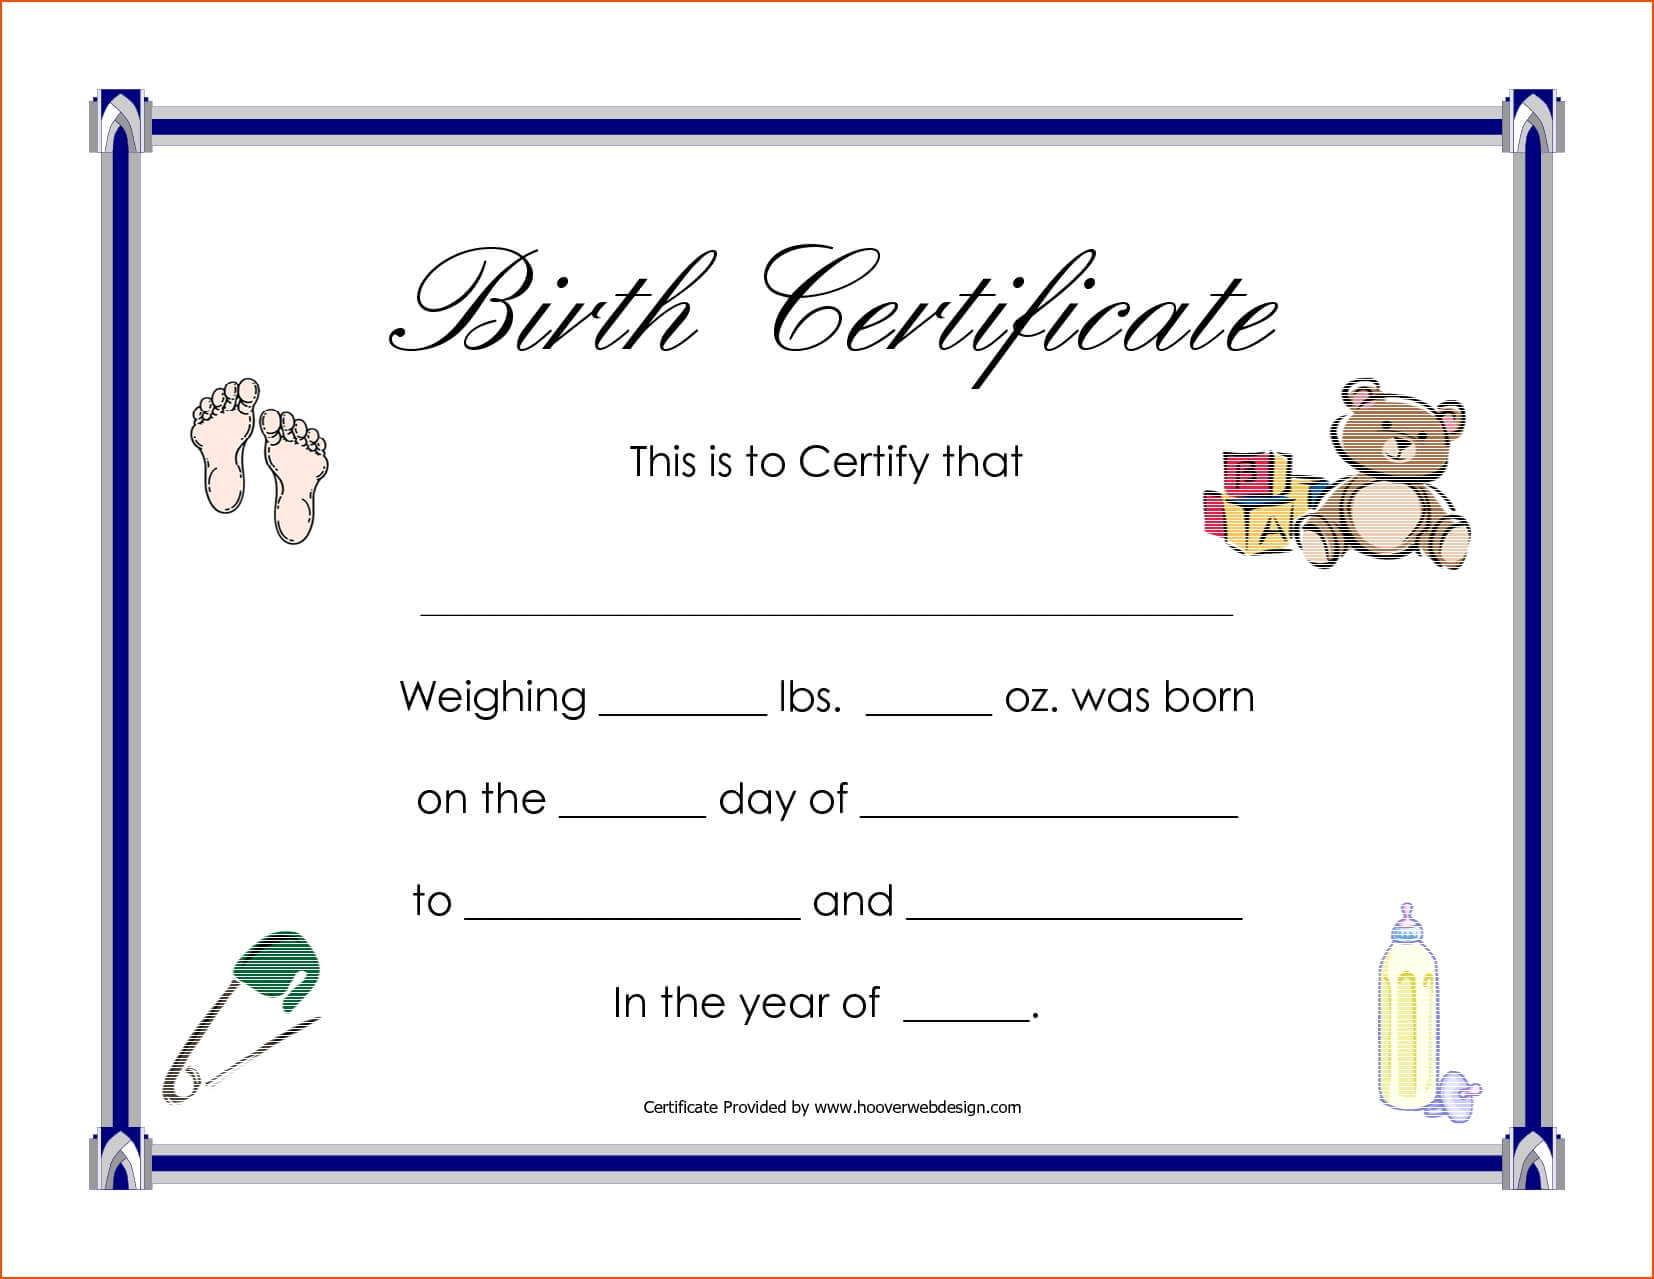 A Birth Certificate Template | Safebest.xyz Regarding Birth Certificate Templates For Word